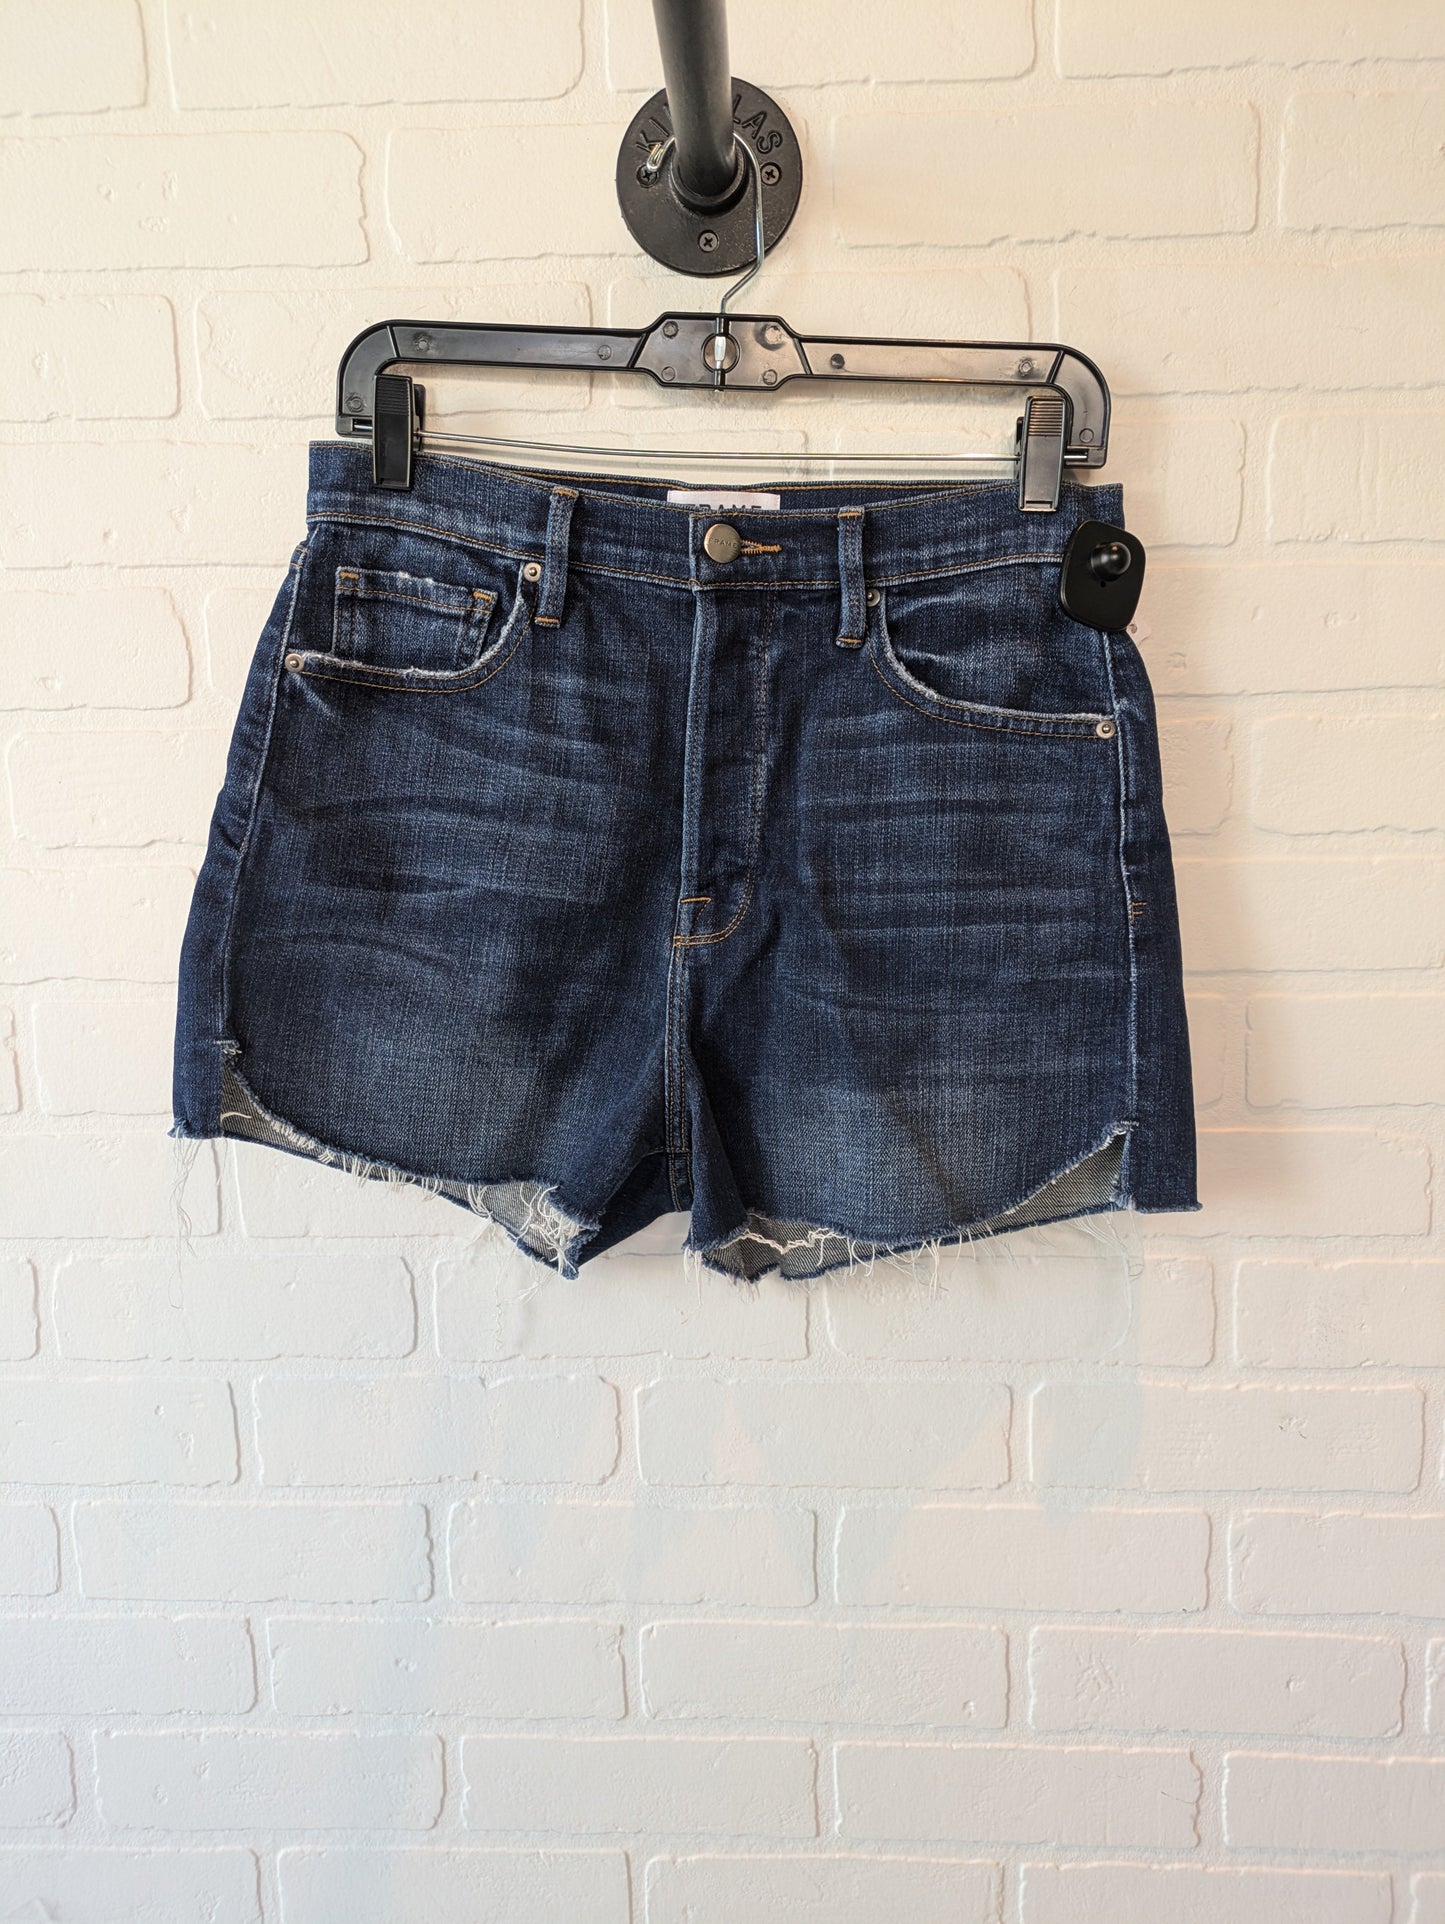 Blue Denim Shorts Frame, Size 4